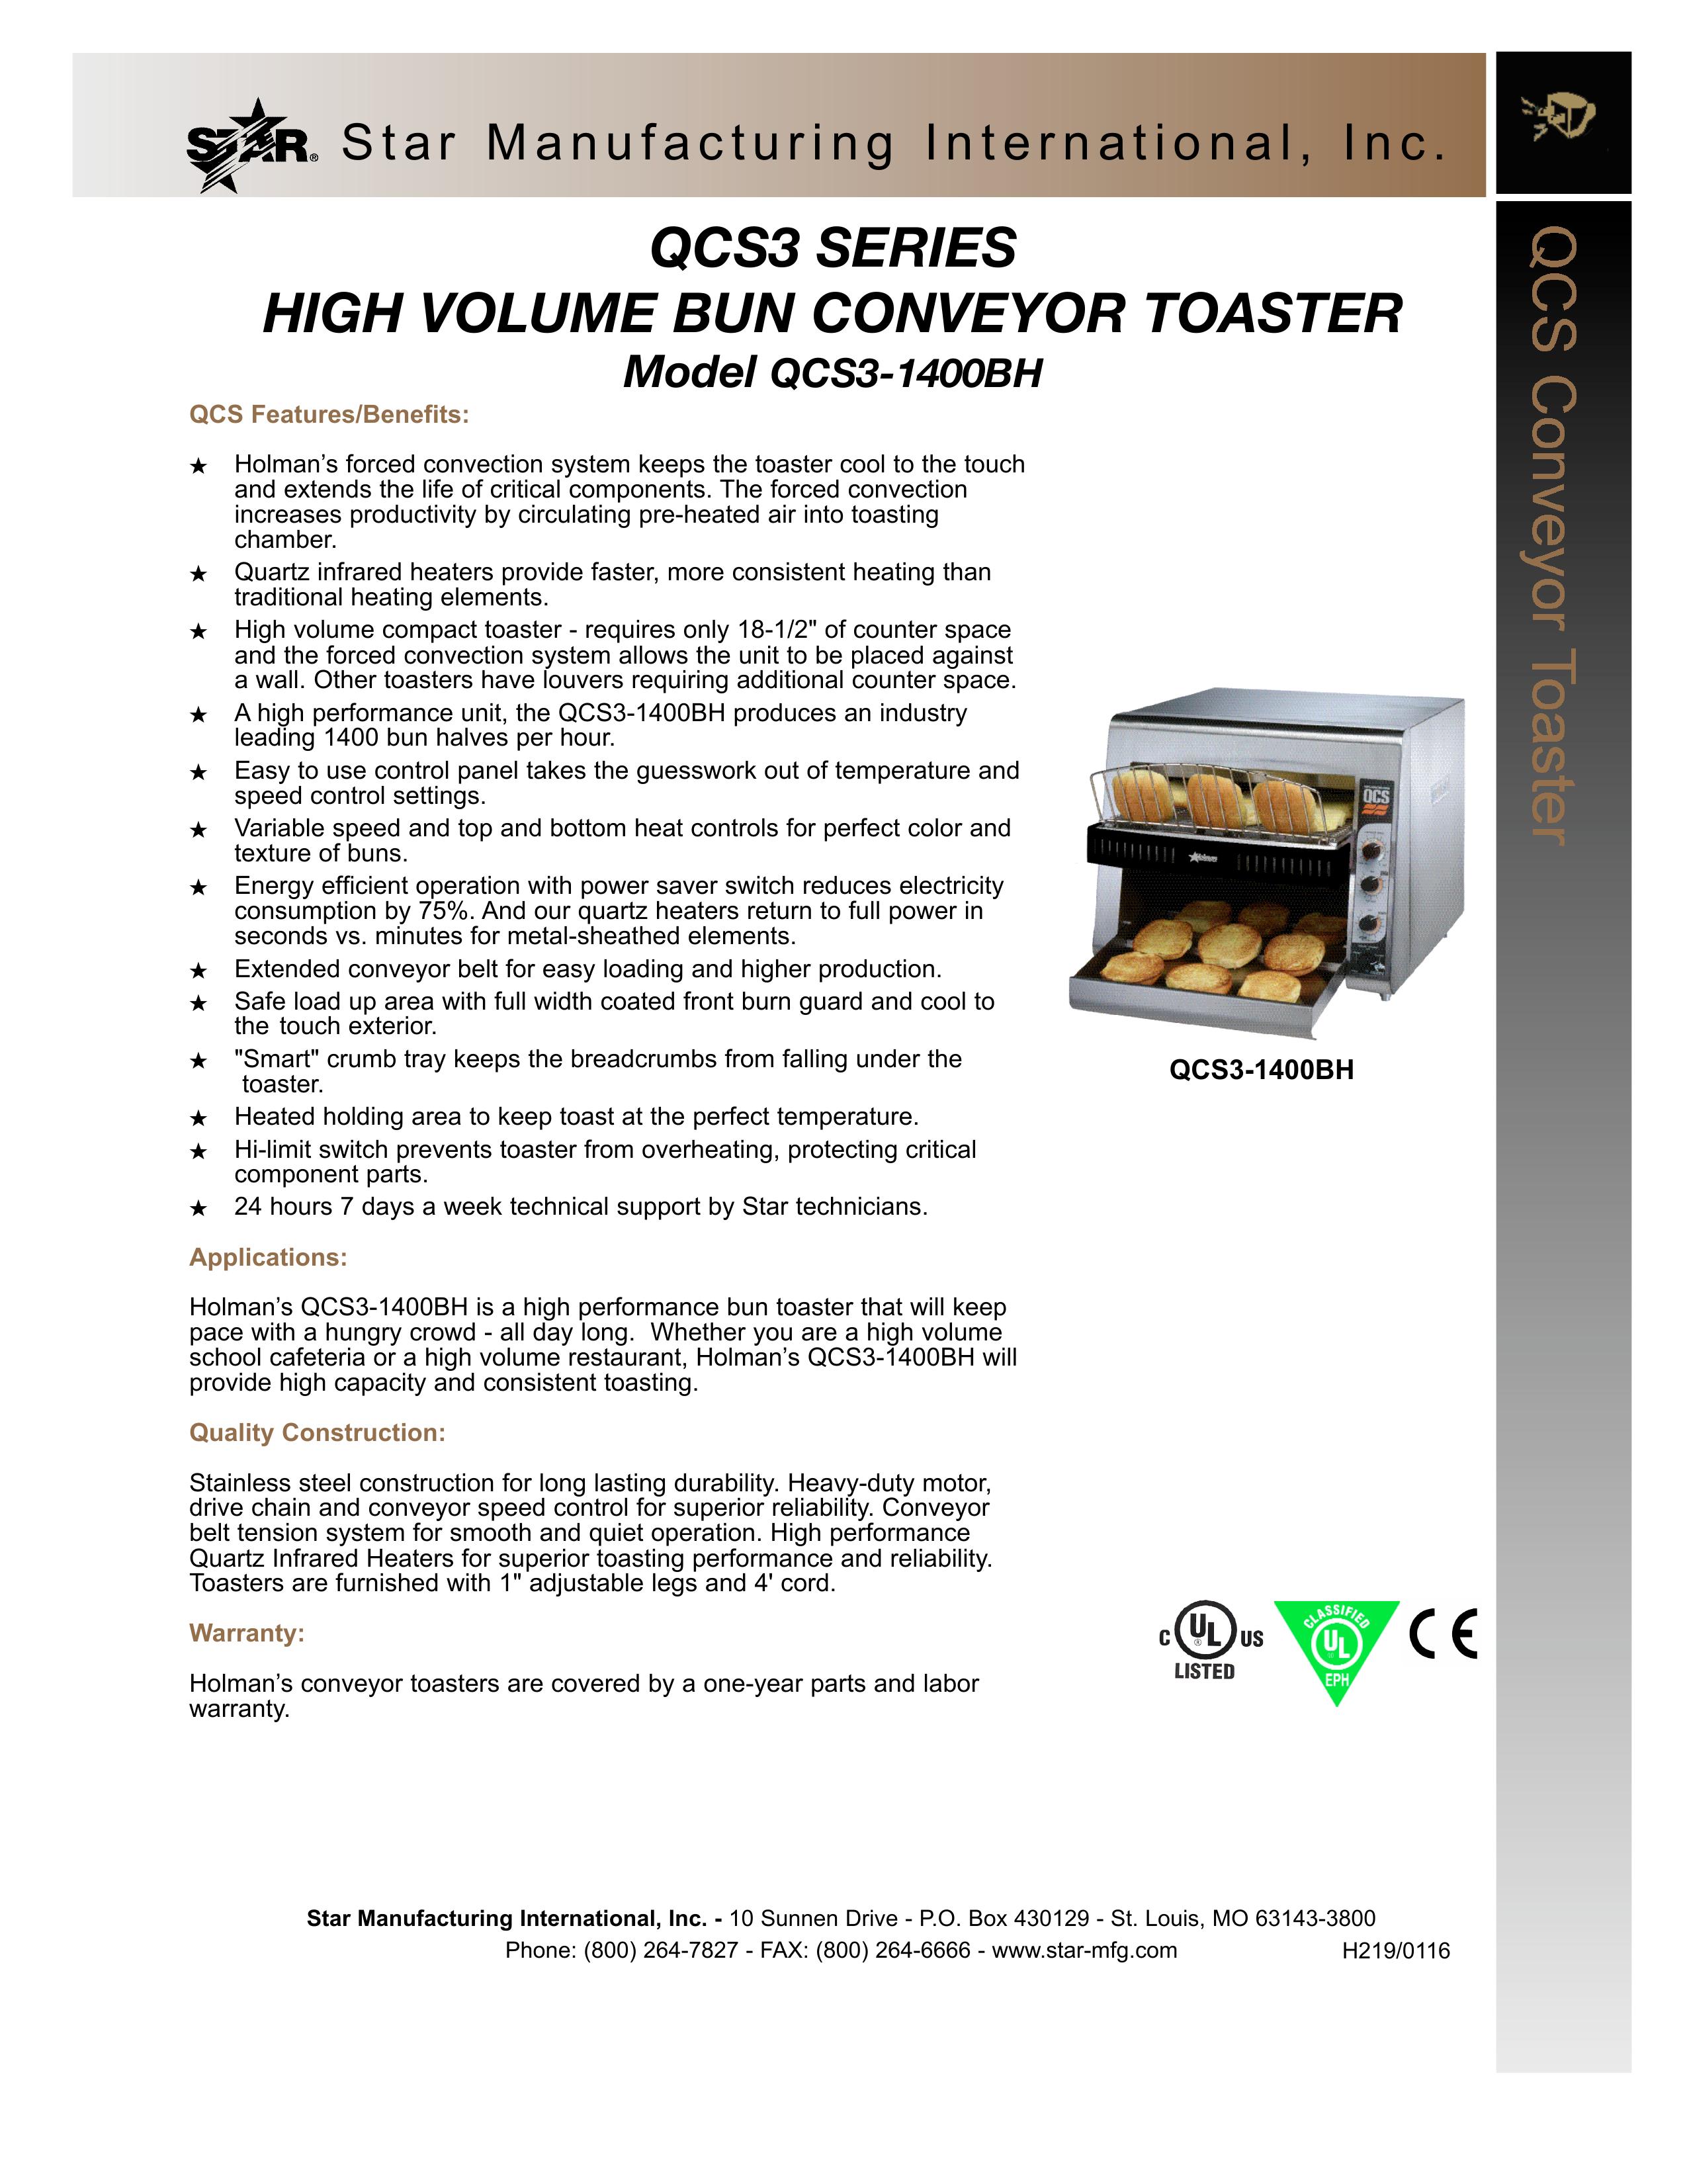 Star Manufacturing QCS3-1400BH Toaster User Manual